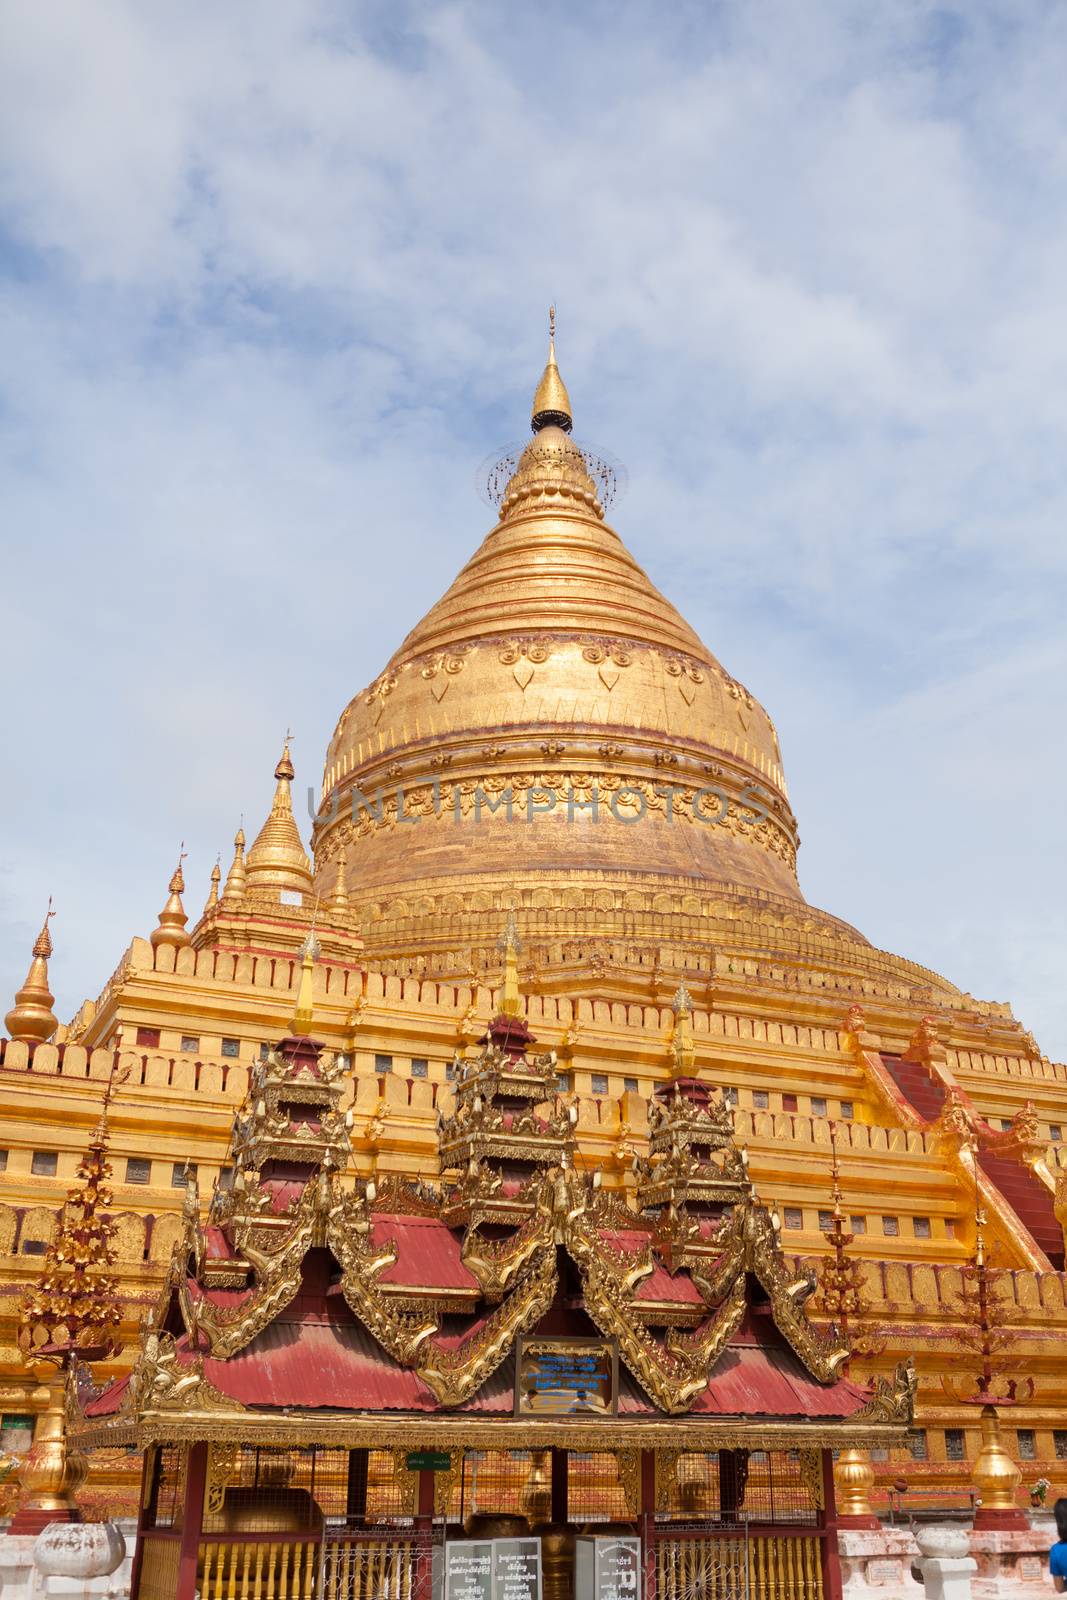 The golden Shwezigon Pagoda by witthaya